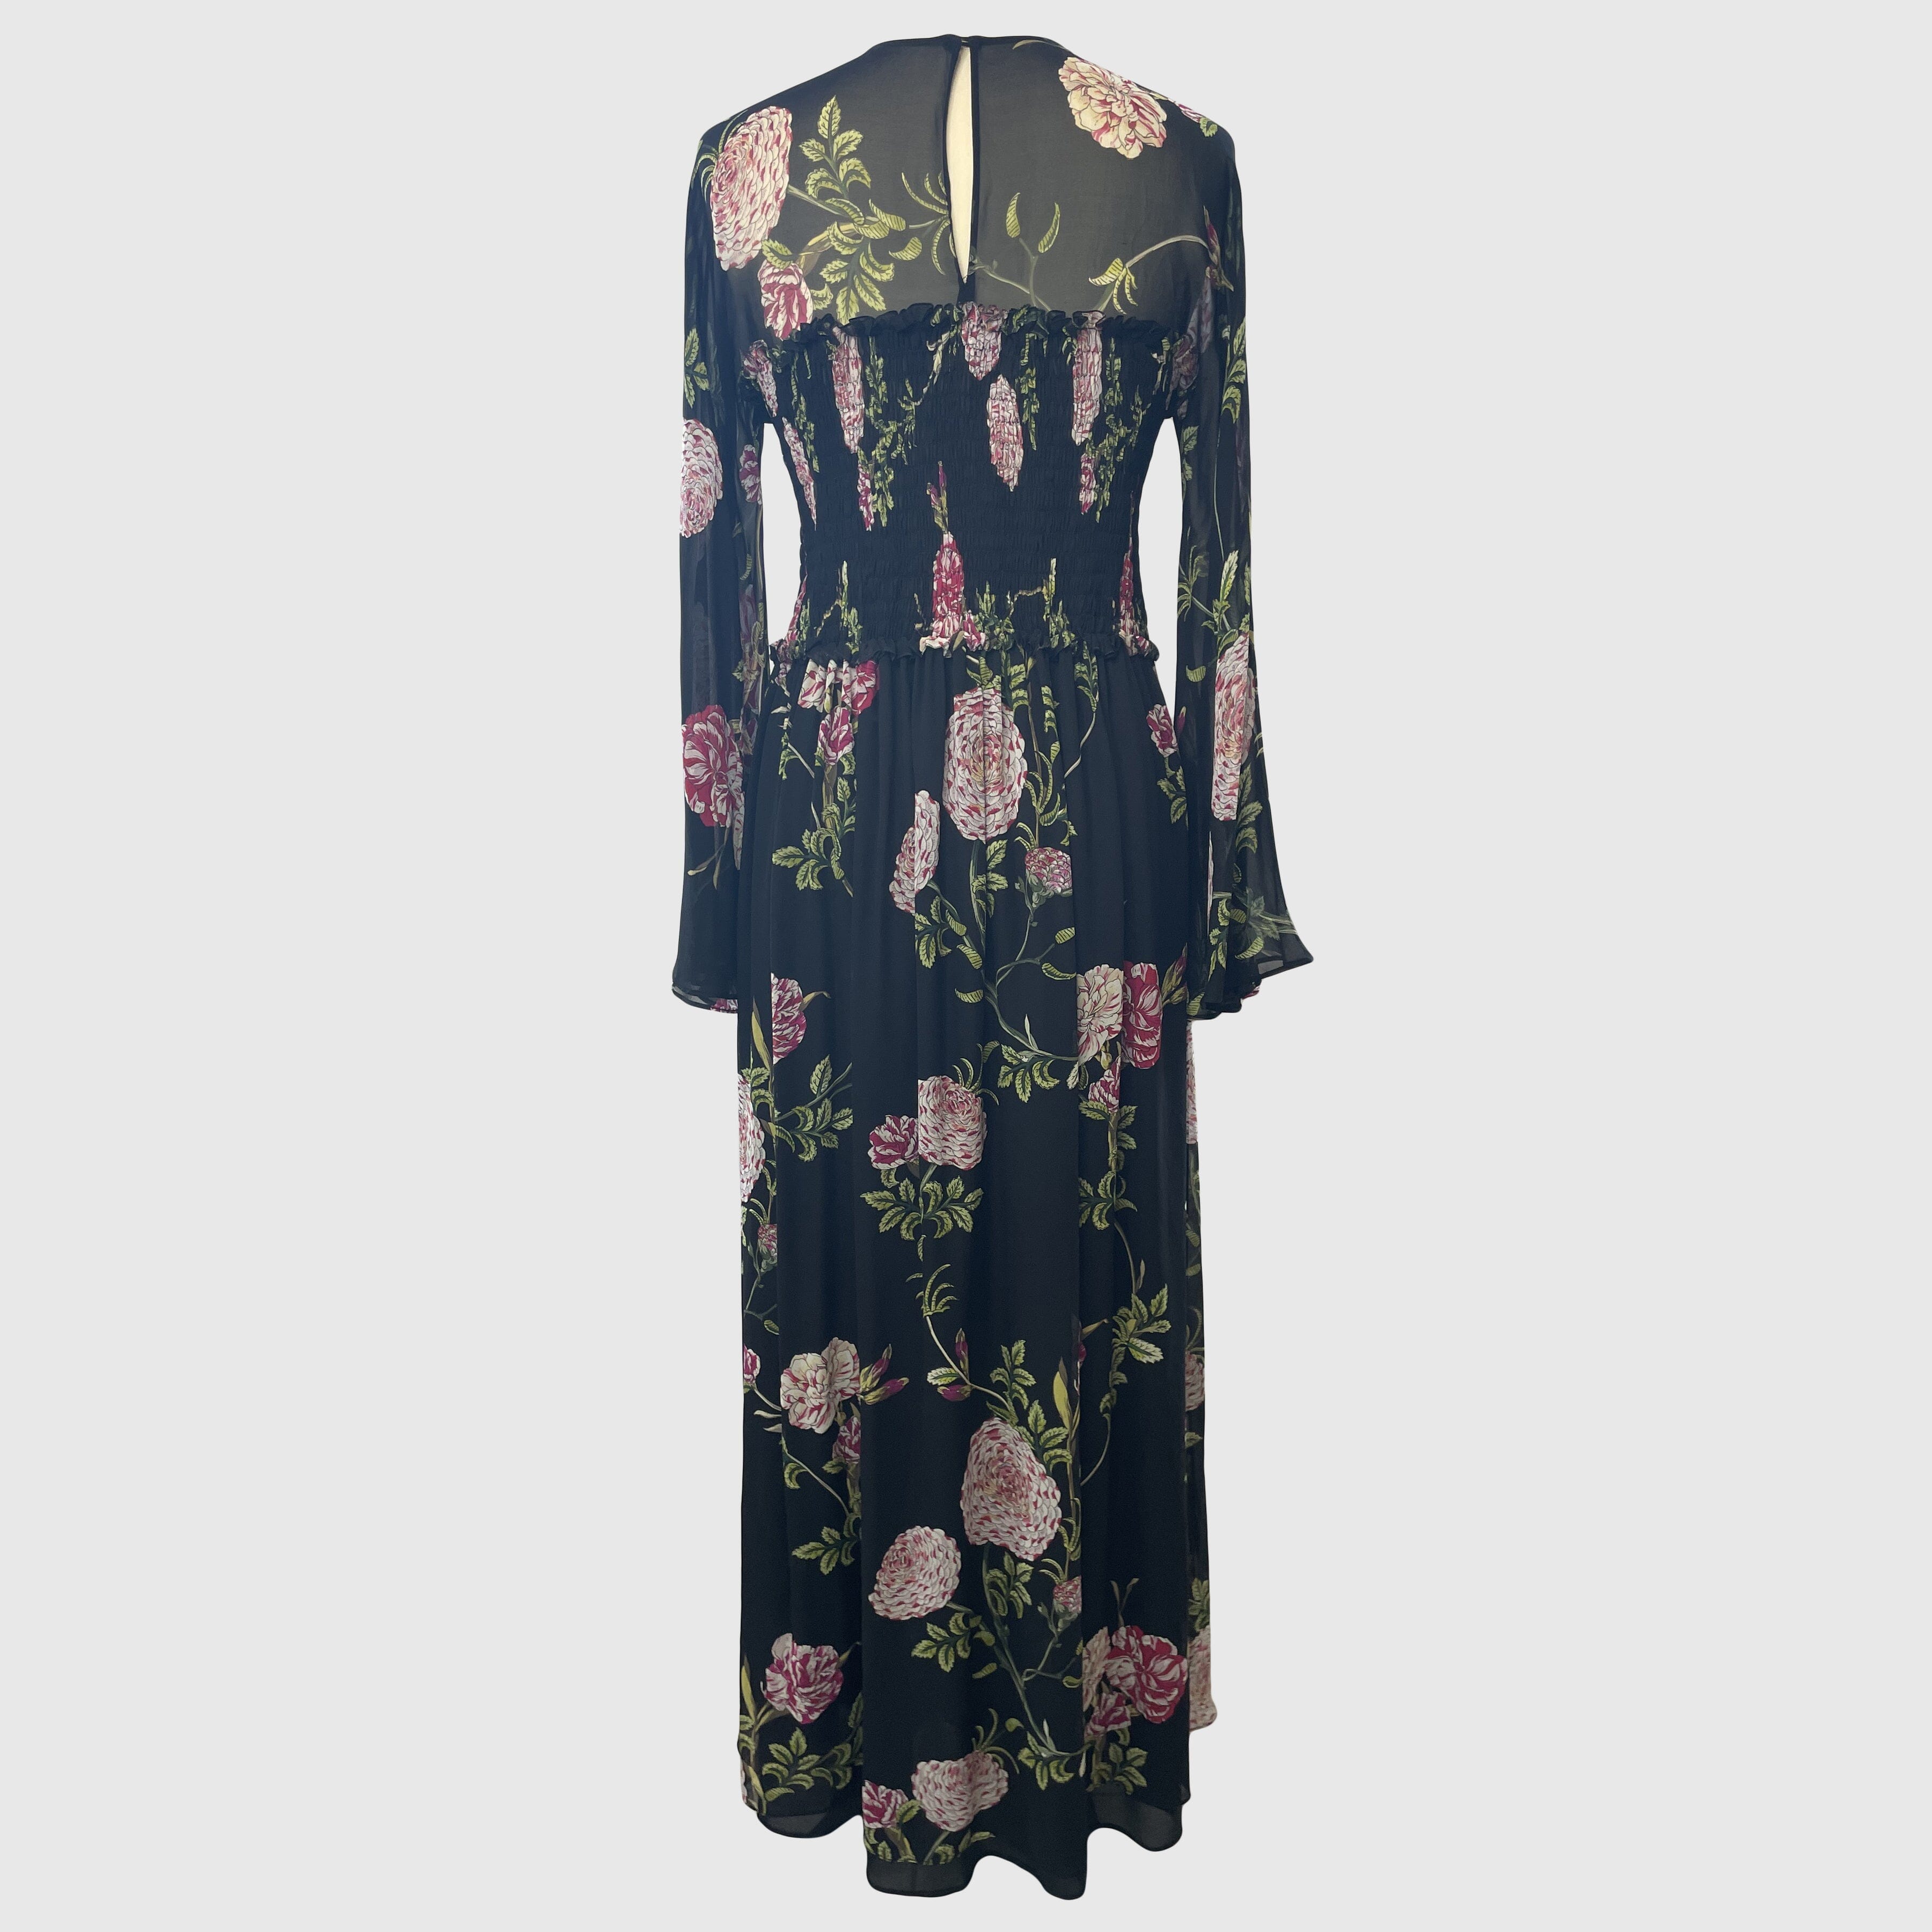 Black/Multicolor Floral Printed Maxi Dress